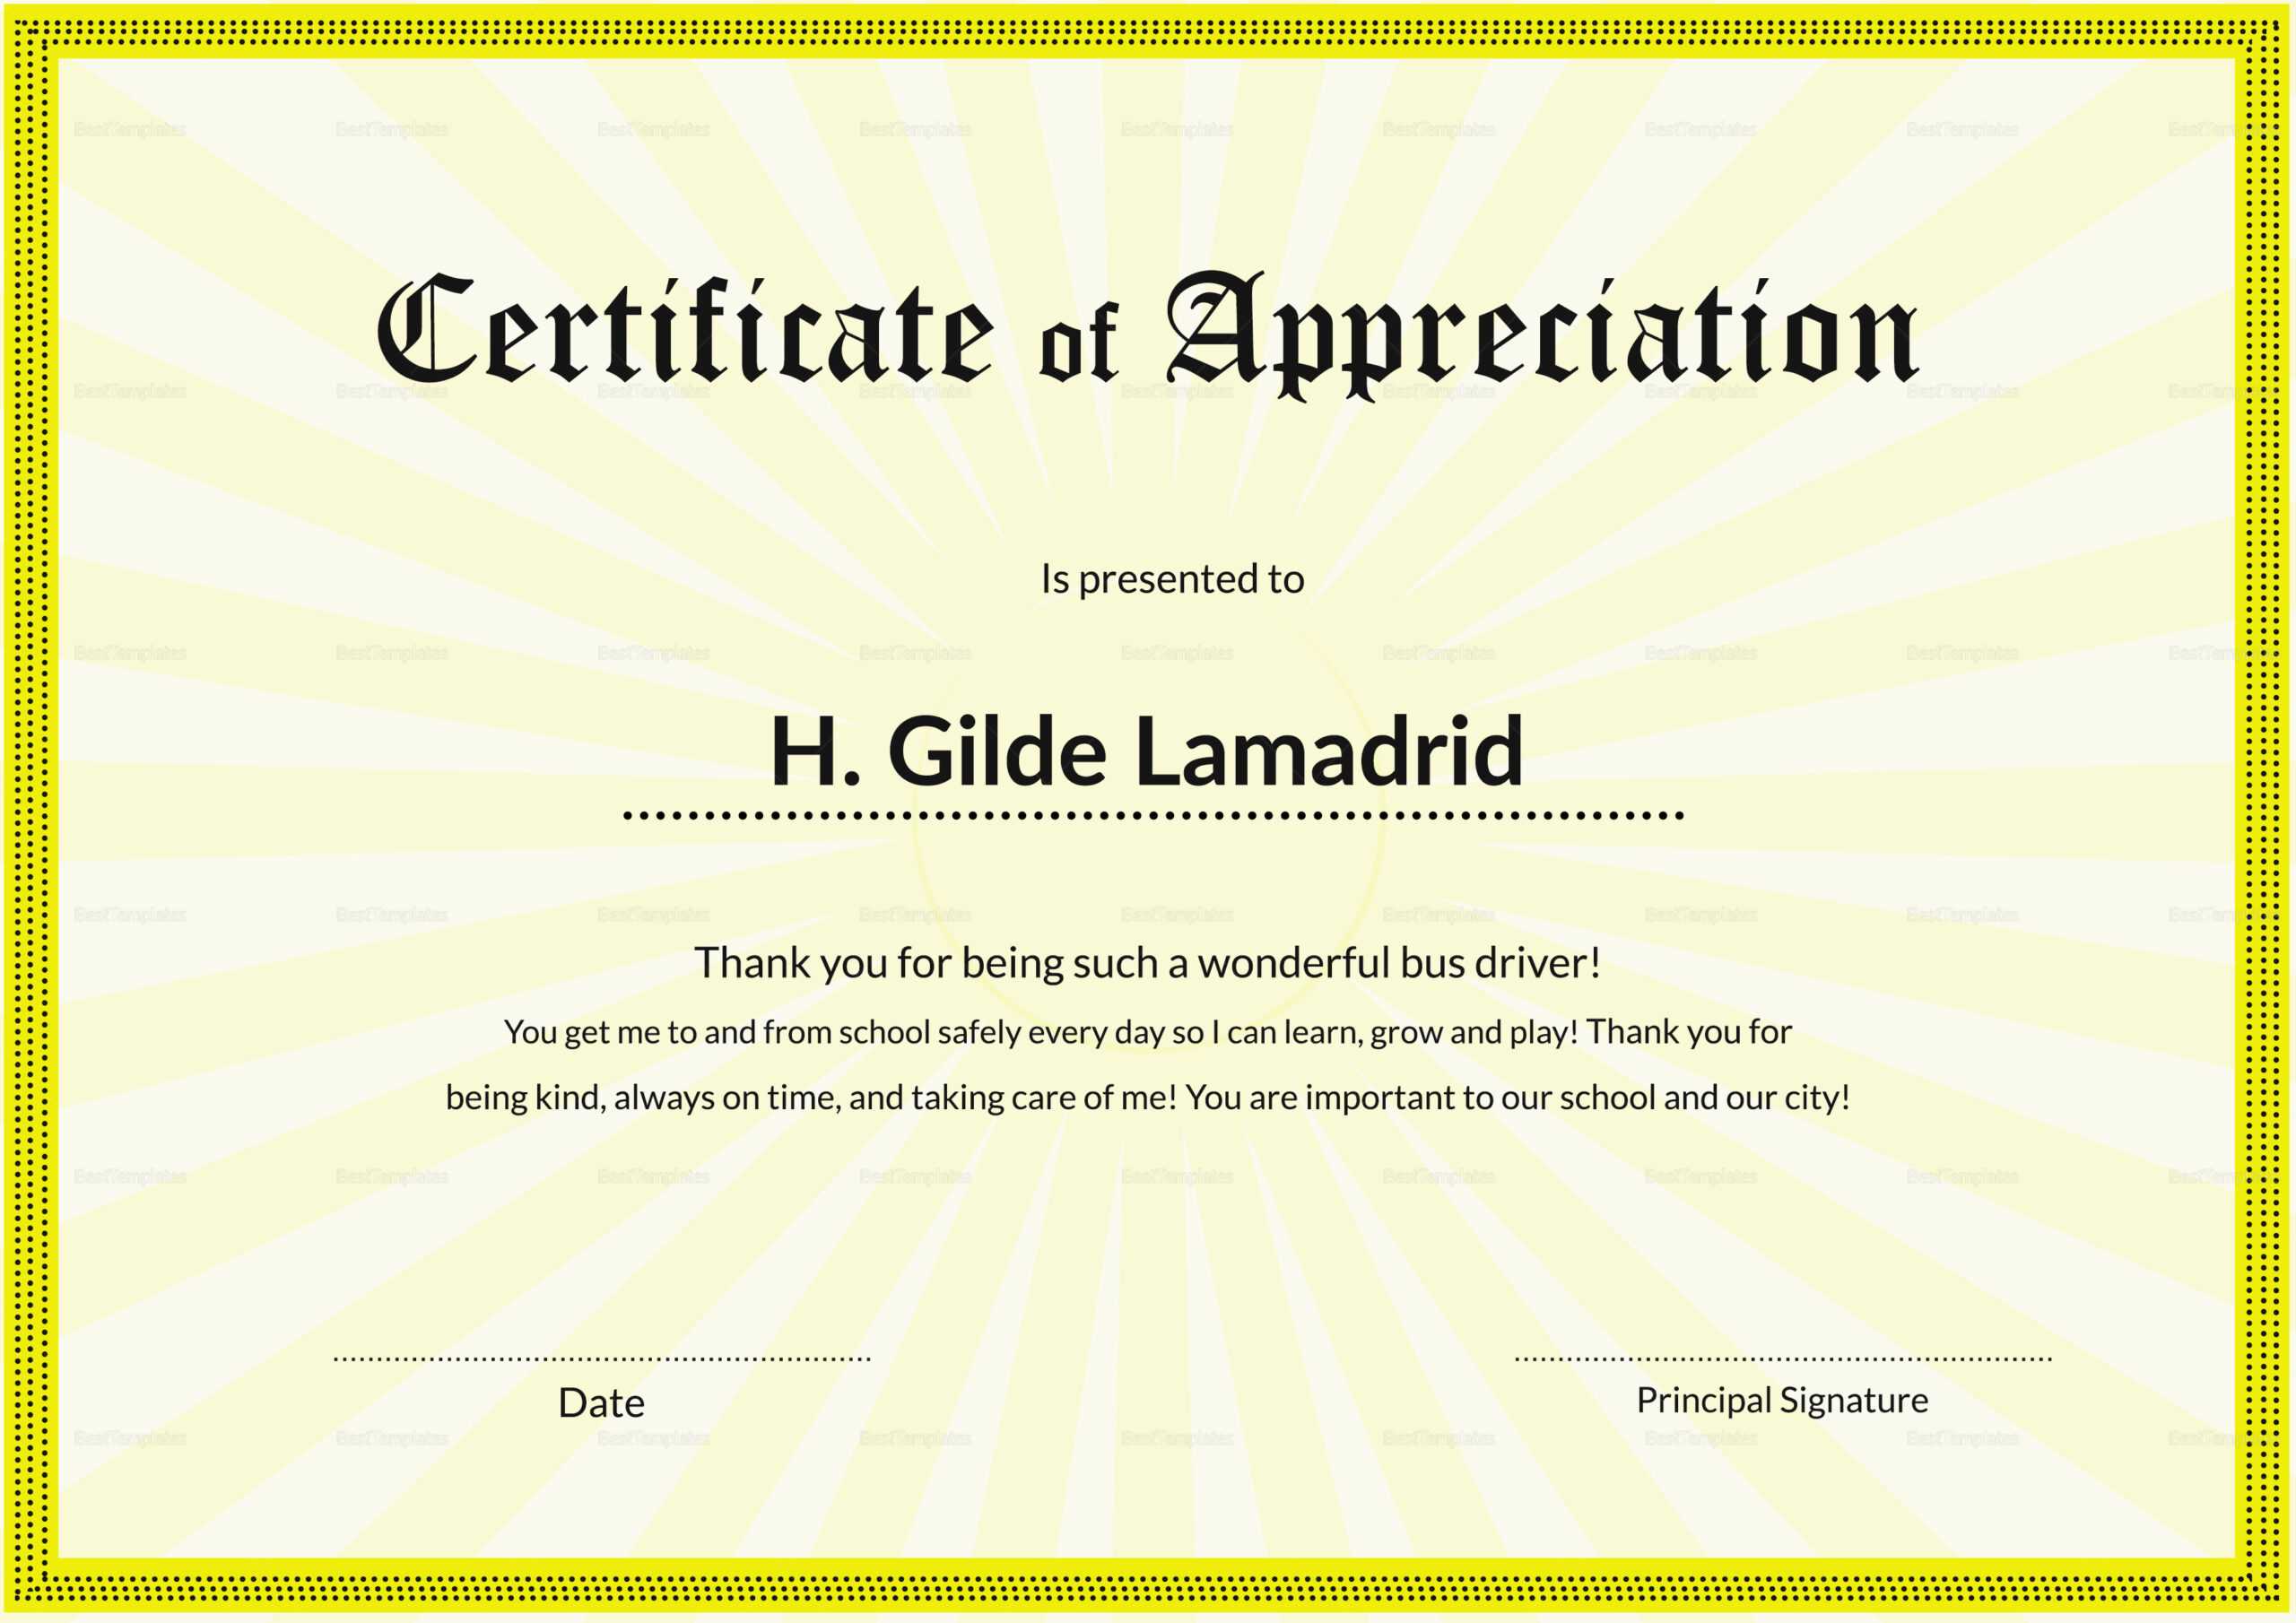 Certificate Of School Appreciation Template With Regard To Certificate Templates For School